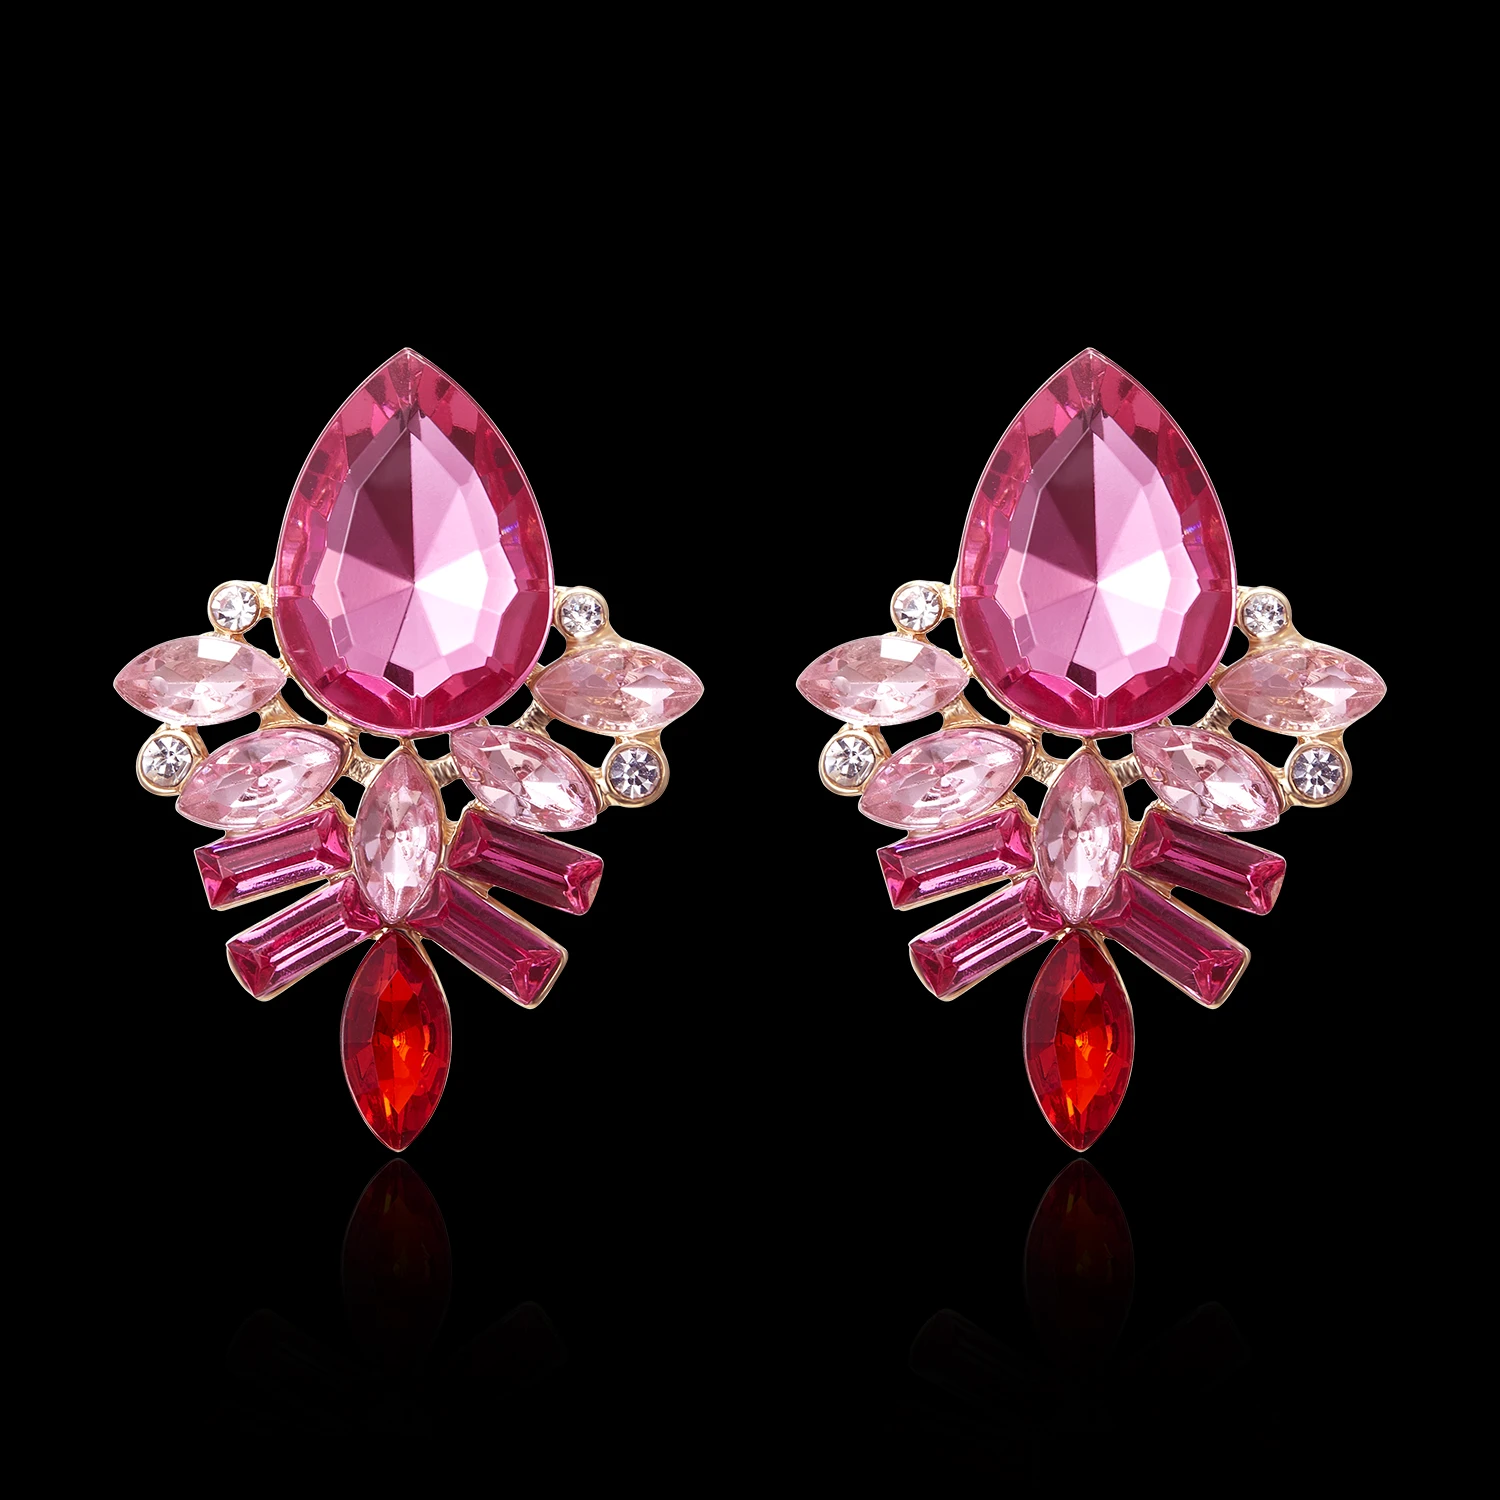 HTB1x.ByXvjsK1Rjy1Xaq6zispXao - NEW Women Fashion Jewelry Style Blue/Black/Pink Earrings Handmade Rhinestone sweet stud crystal Dangle earrings for women girl